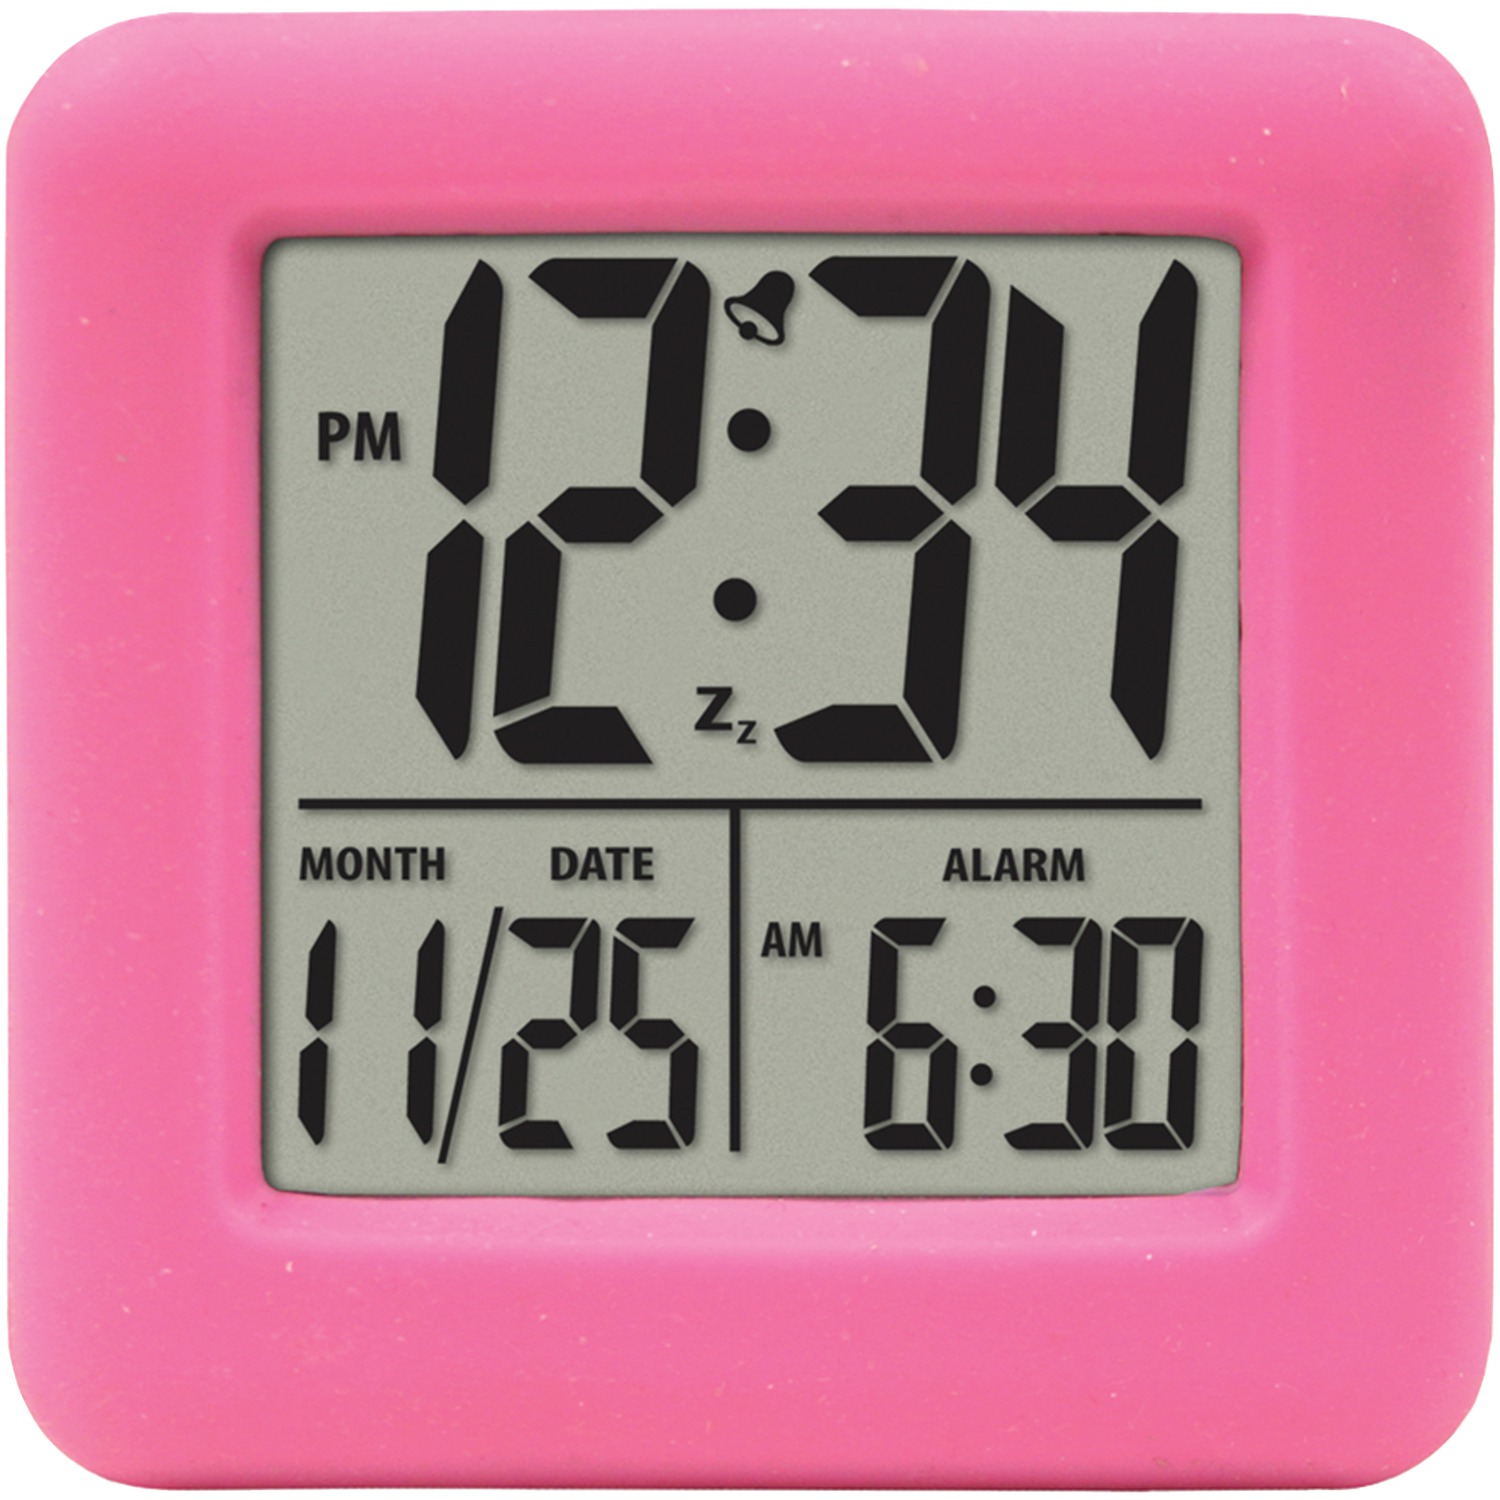 Equity by La Crosse Digital Alarm Clocks, 70902 - image 1 of 6